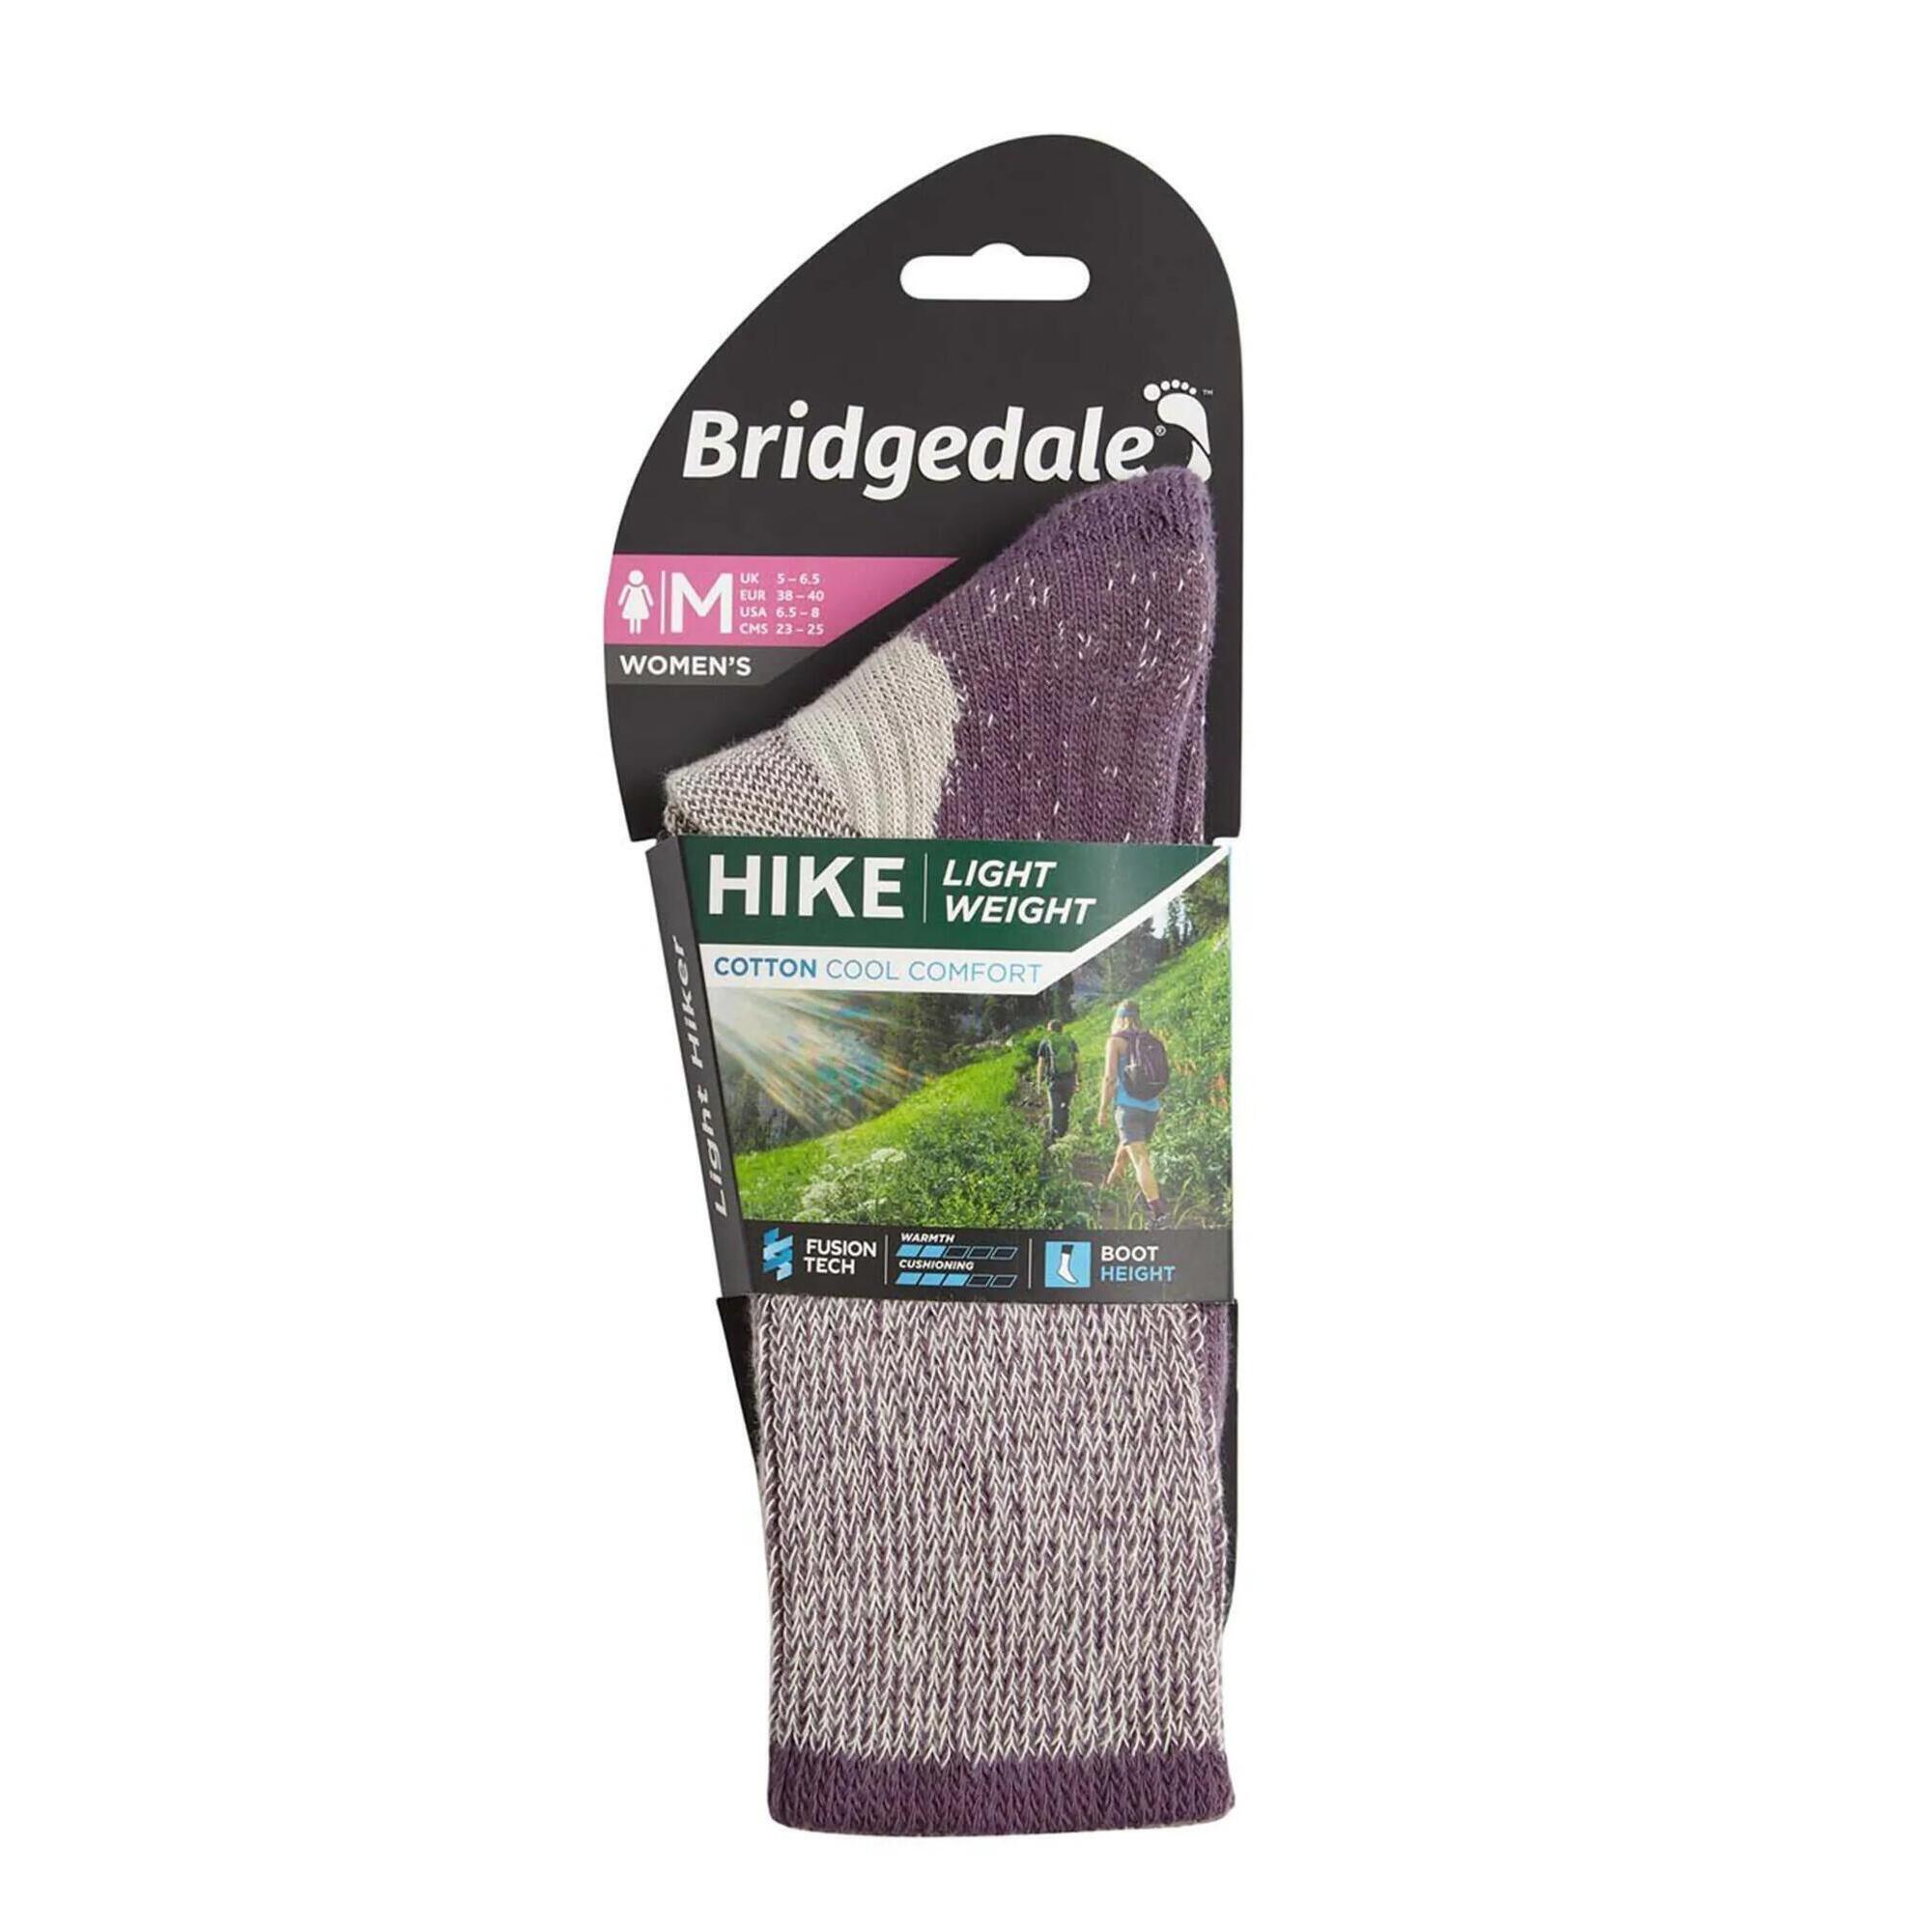 BRIDGEDALE HIKE Lightweight Cotton Cool Comfort Boot Women's - Purple